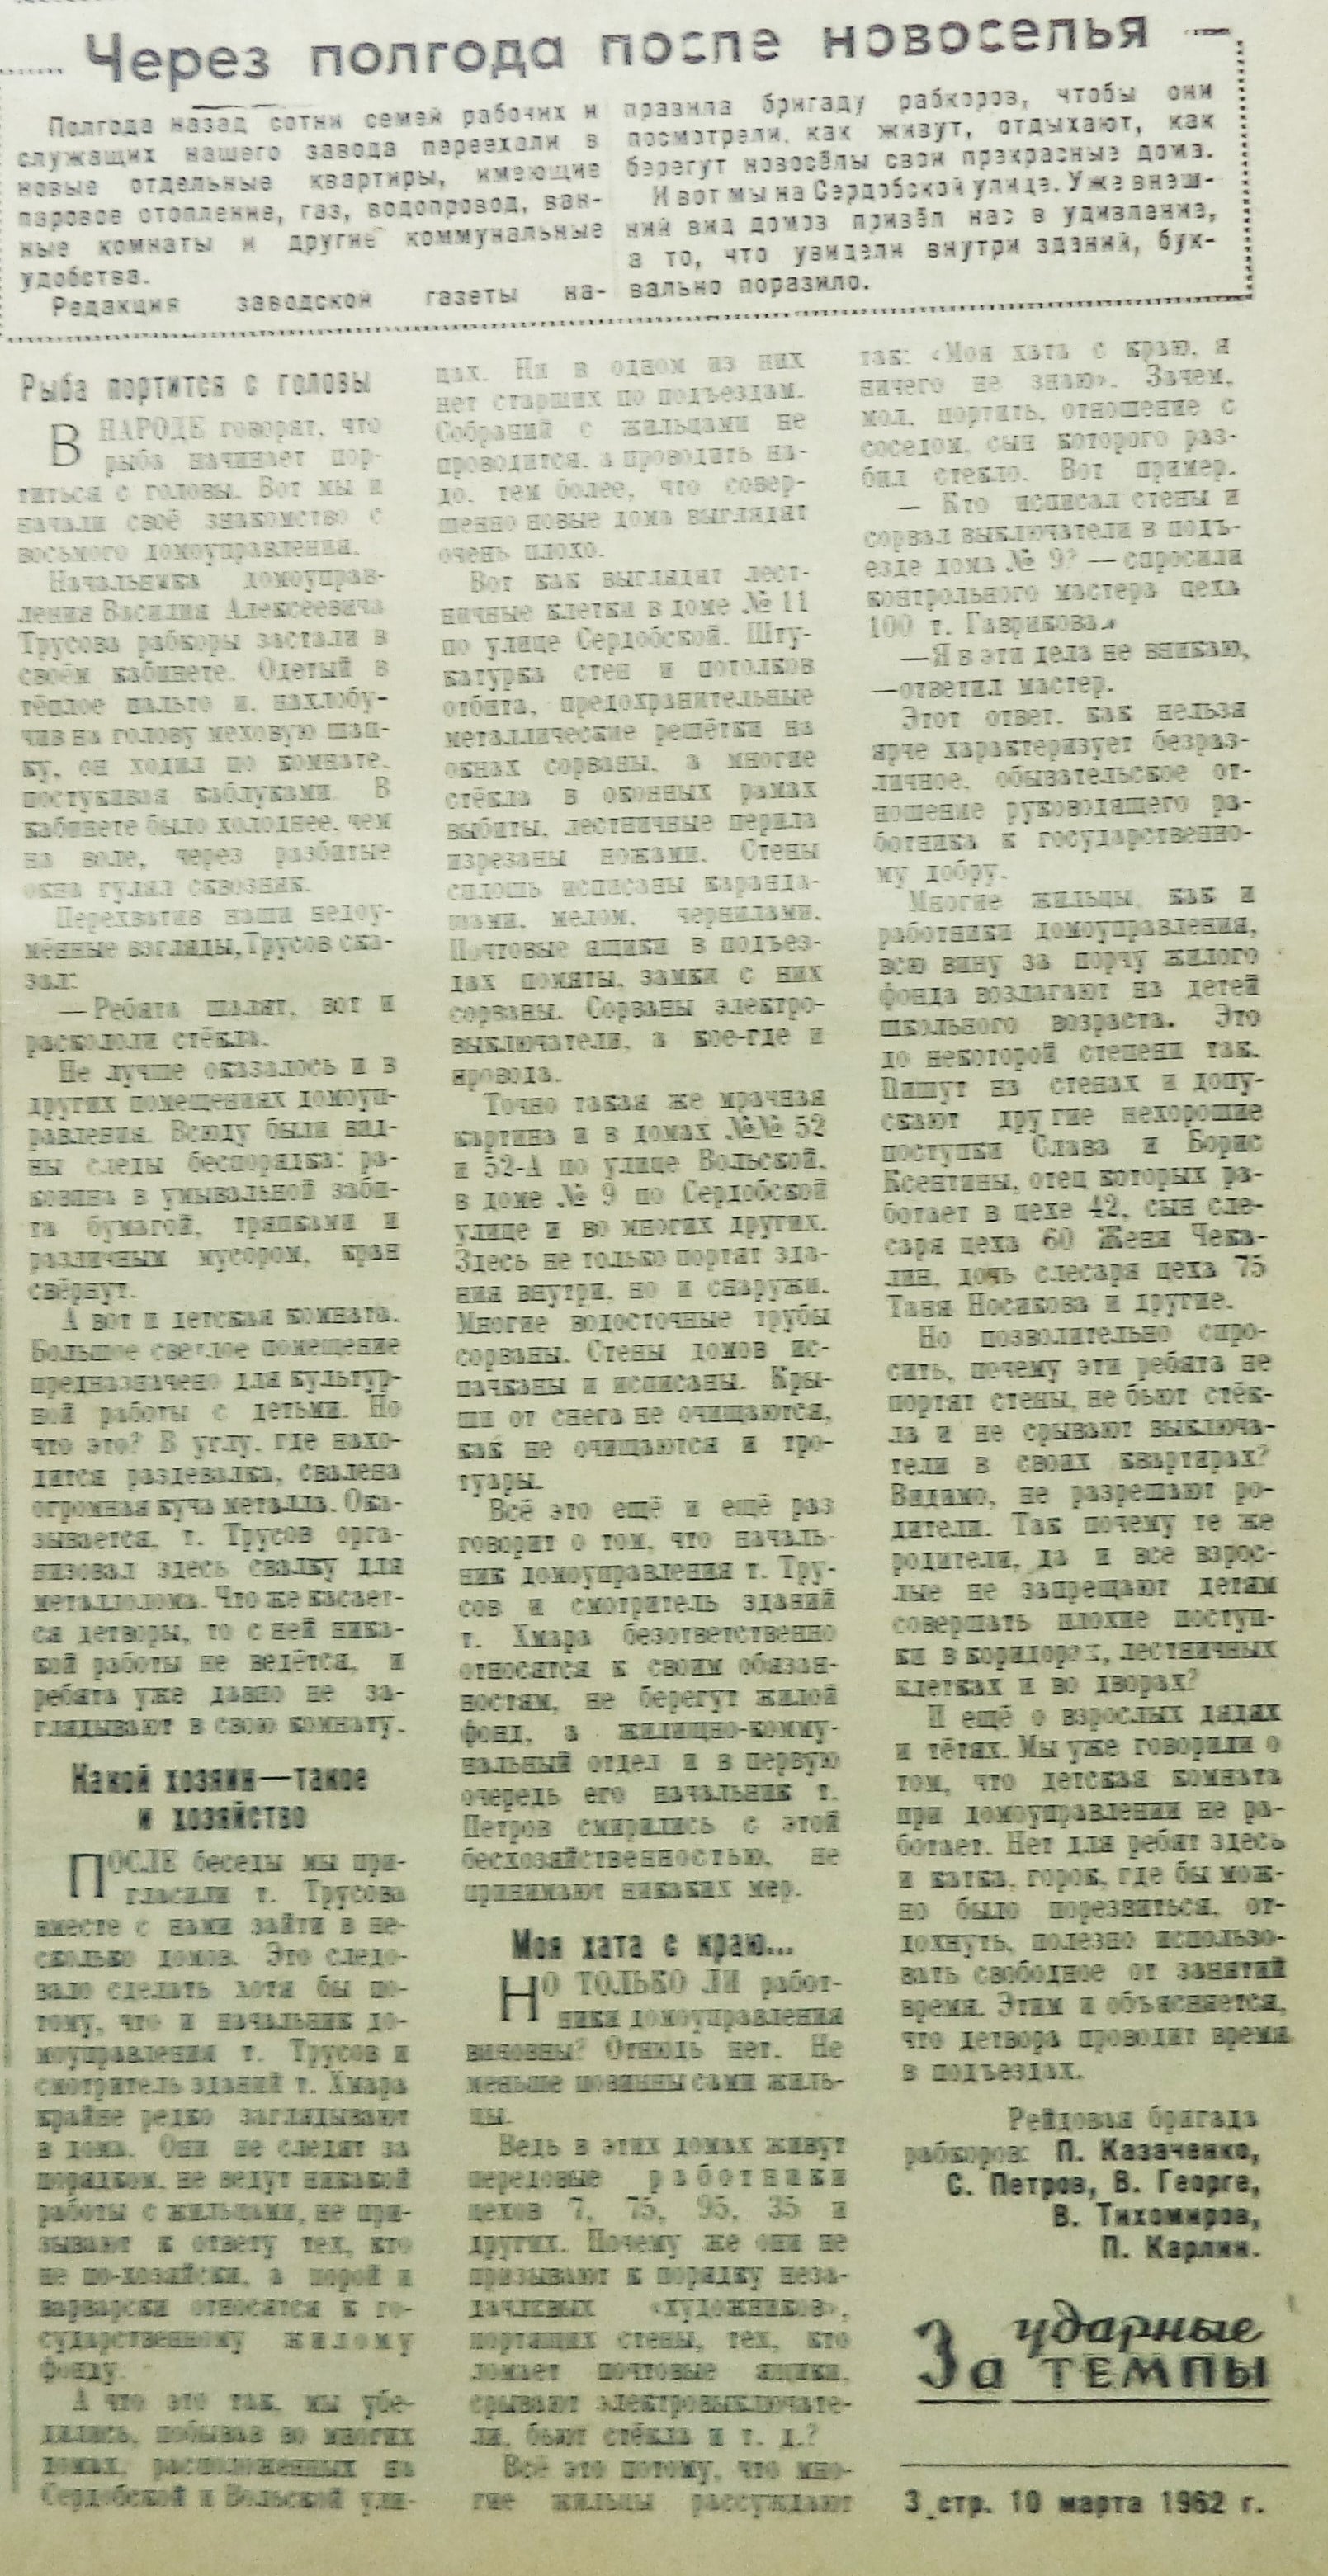 Сердобская-ФОТО-15-За ударные темпы-1962-10 марта